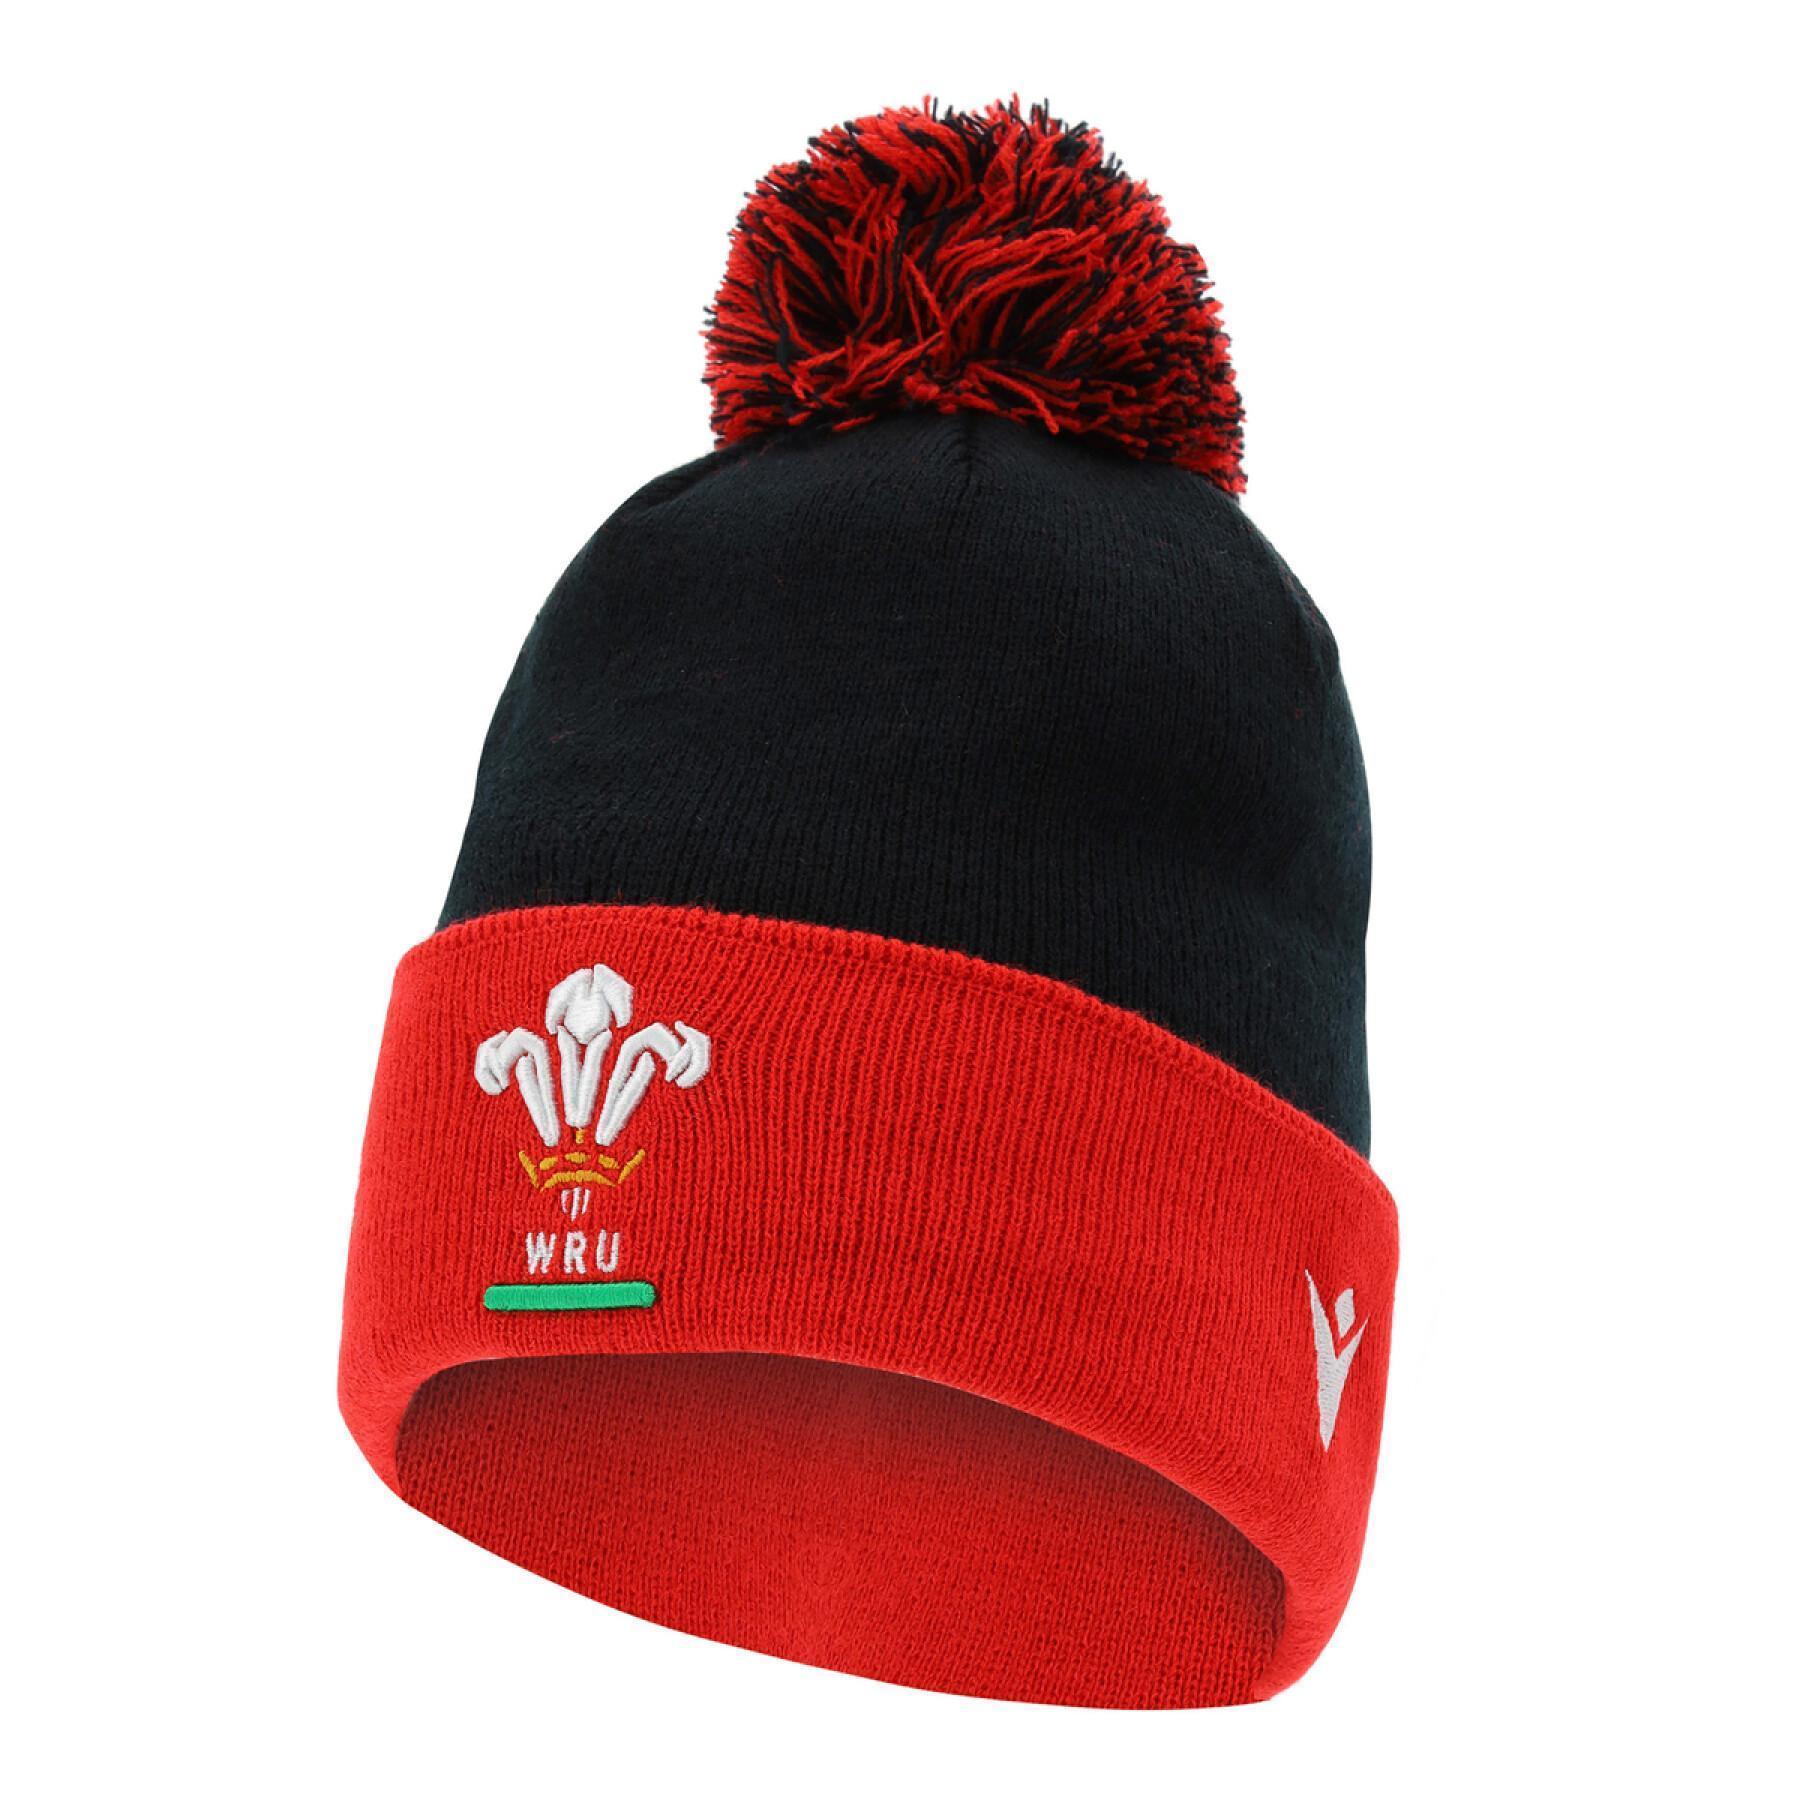 Cappello per bambini con pompon Pays de Galles rugby 2020/21